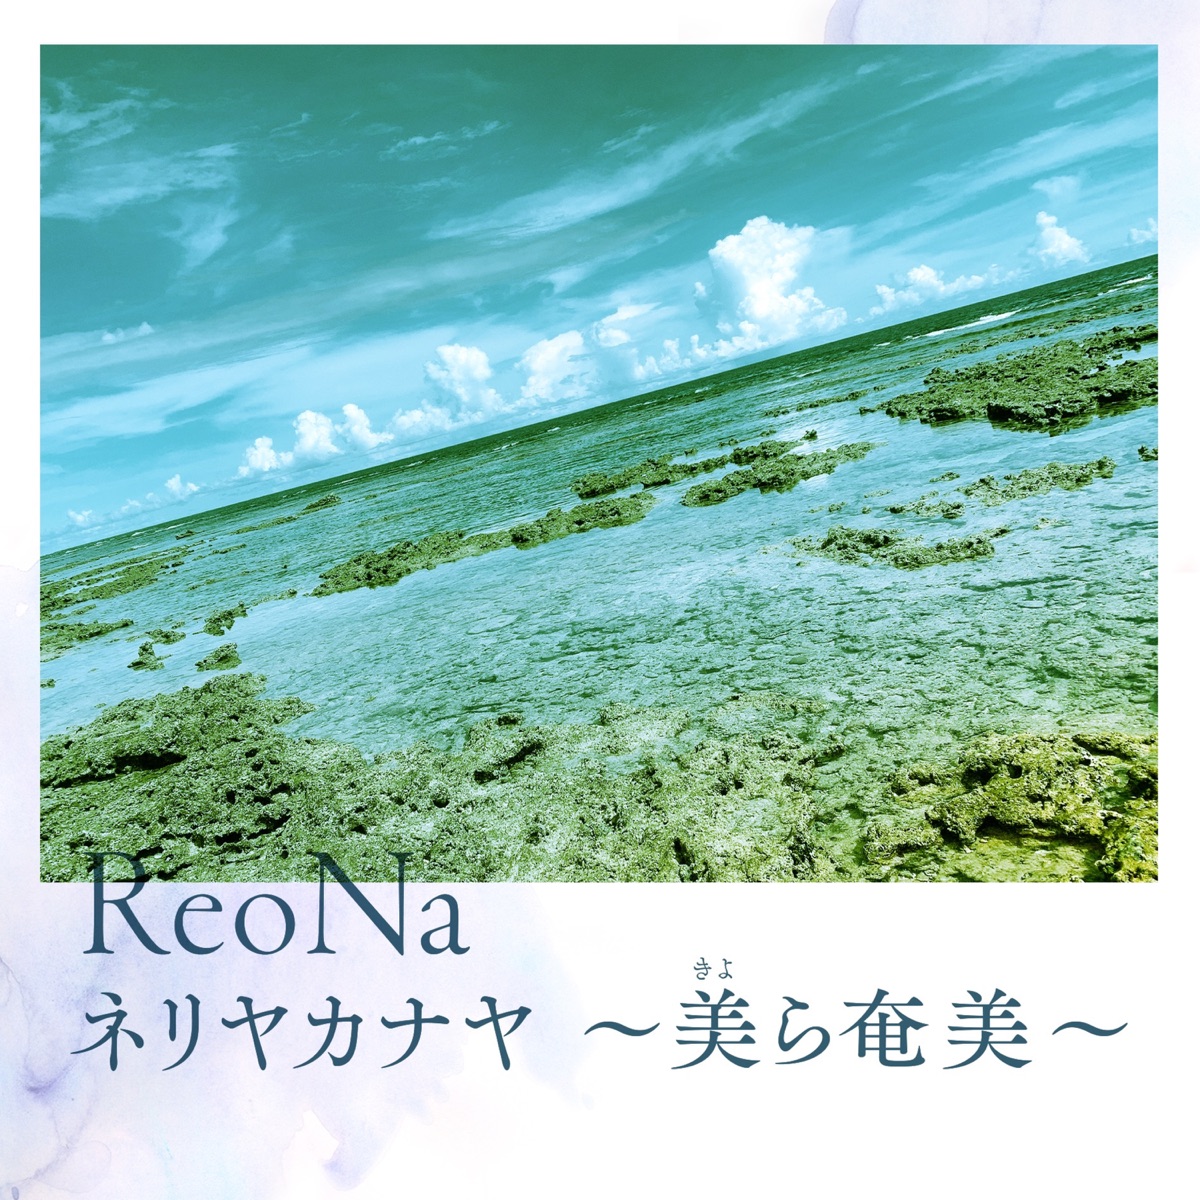 Cover art for『ReoNa - Neriya Kanaya ~Kyora Amami~』from the release『Neriya Kanaya ~Kyora Amami~』